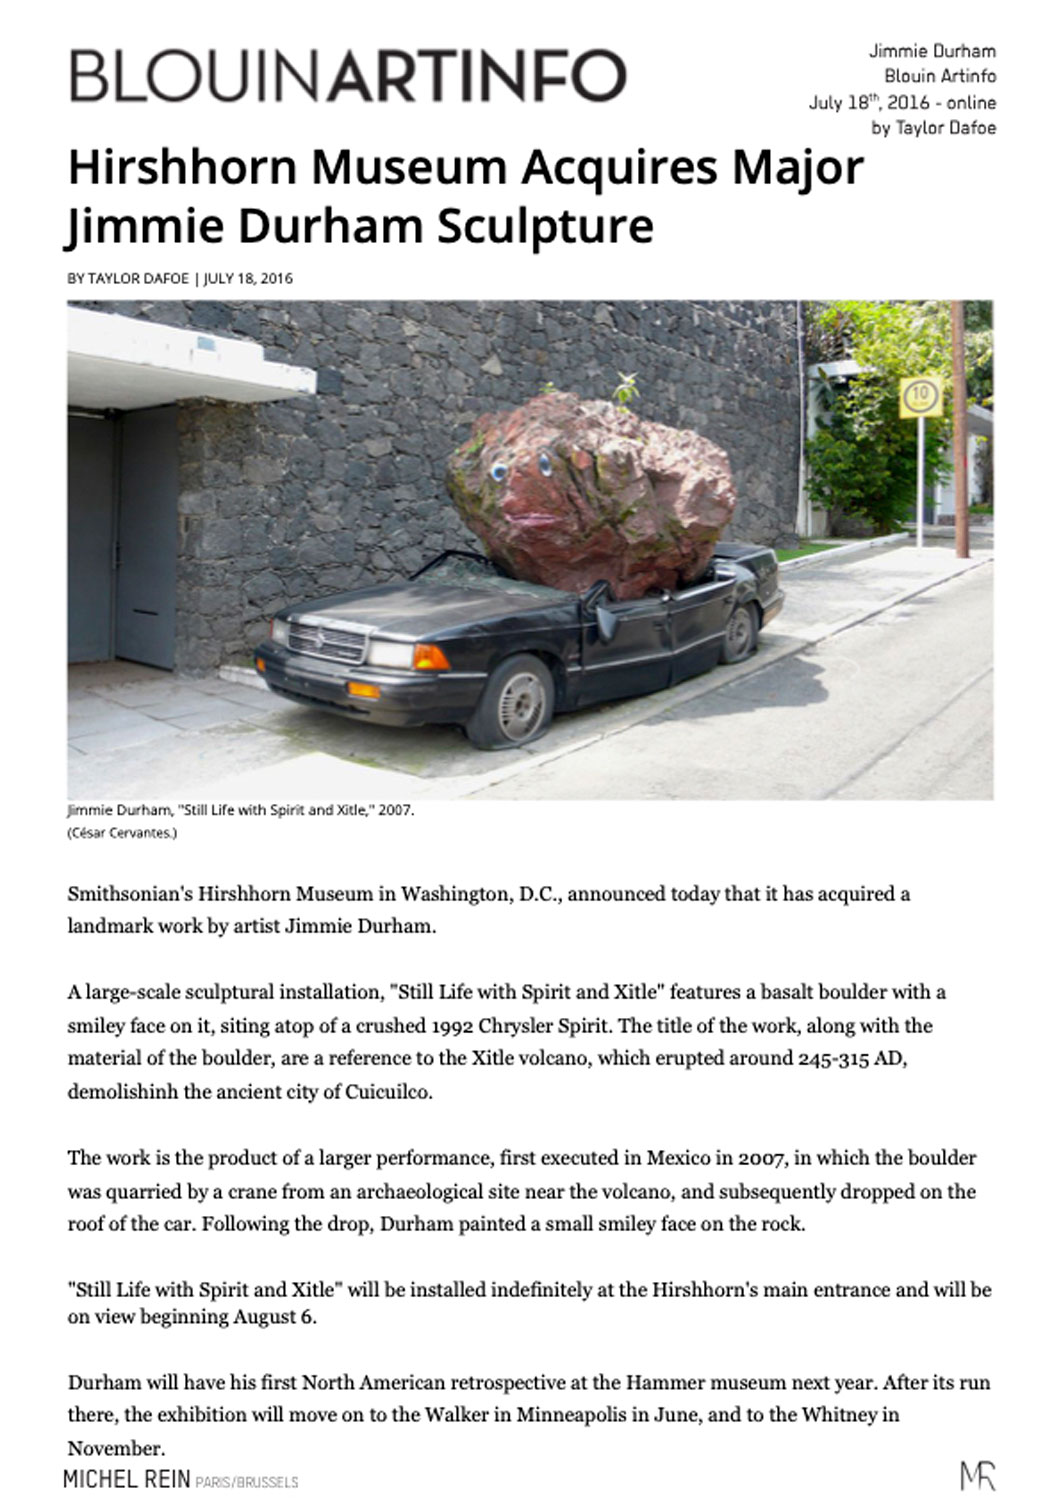 Jimmie Durham - Blouin Artinfo